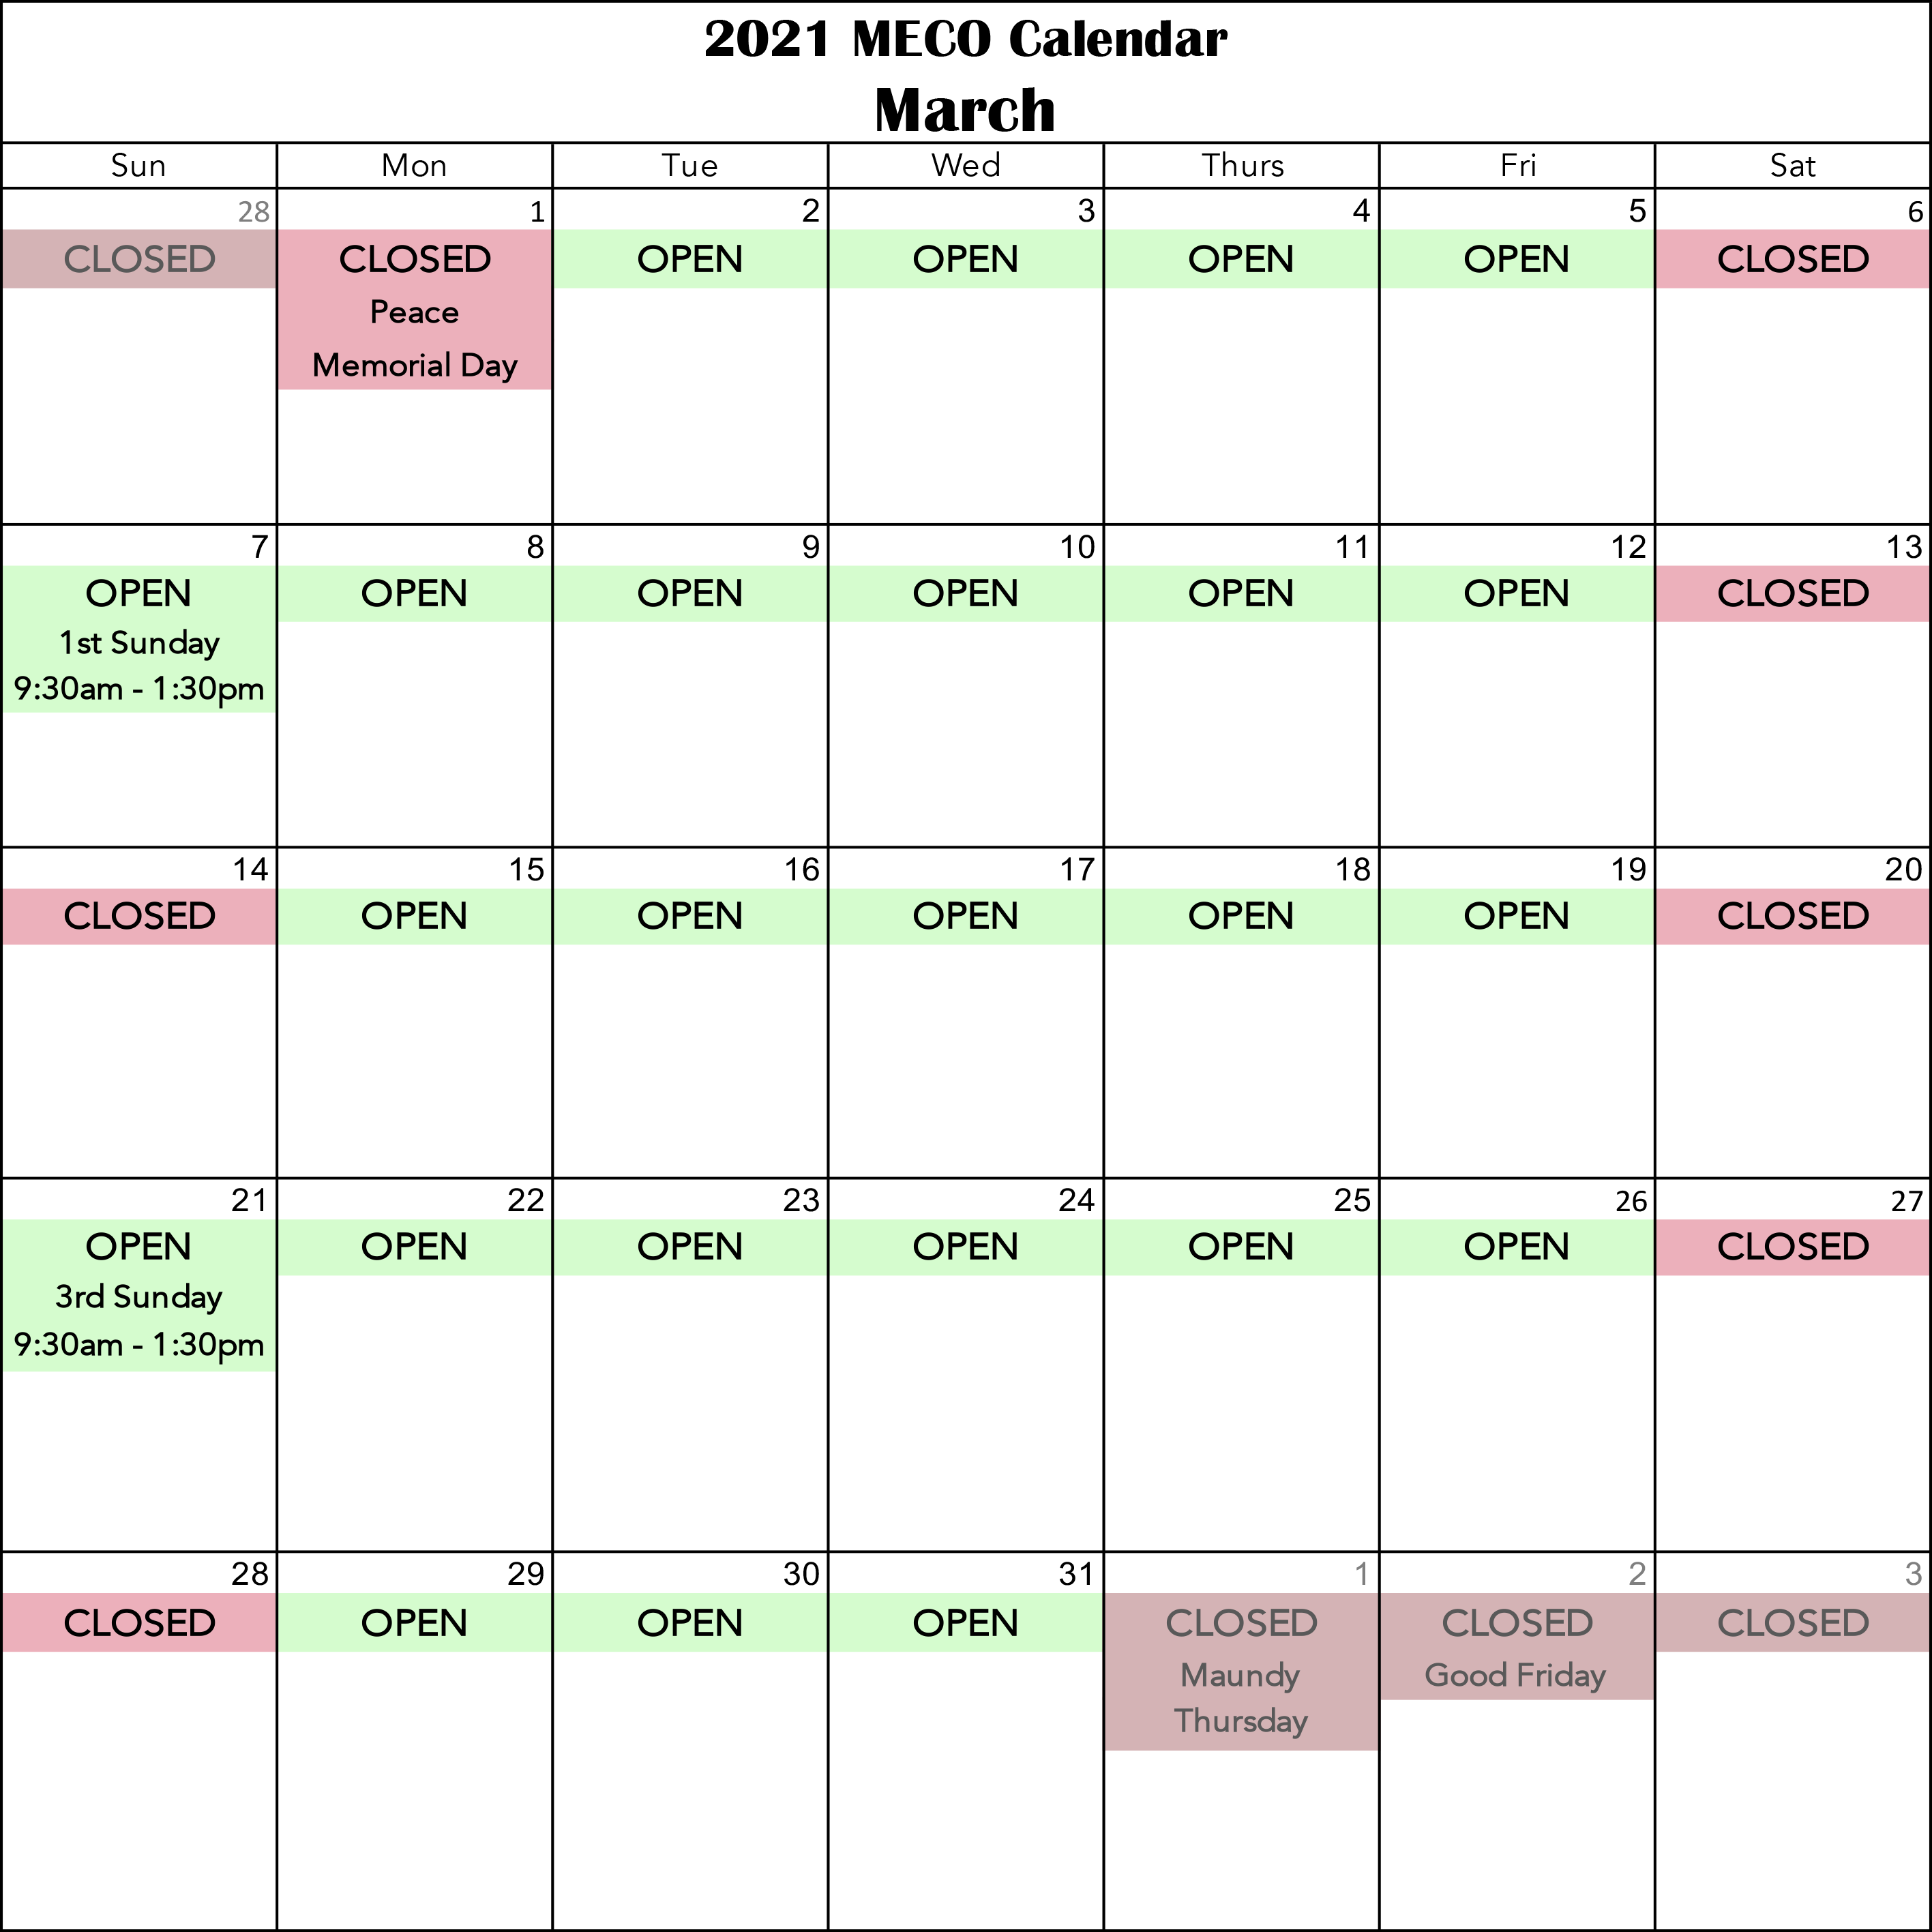 March 2021 Calendar.png